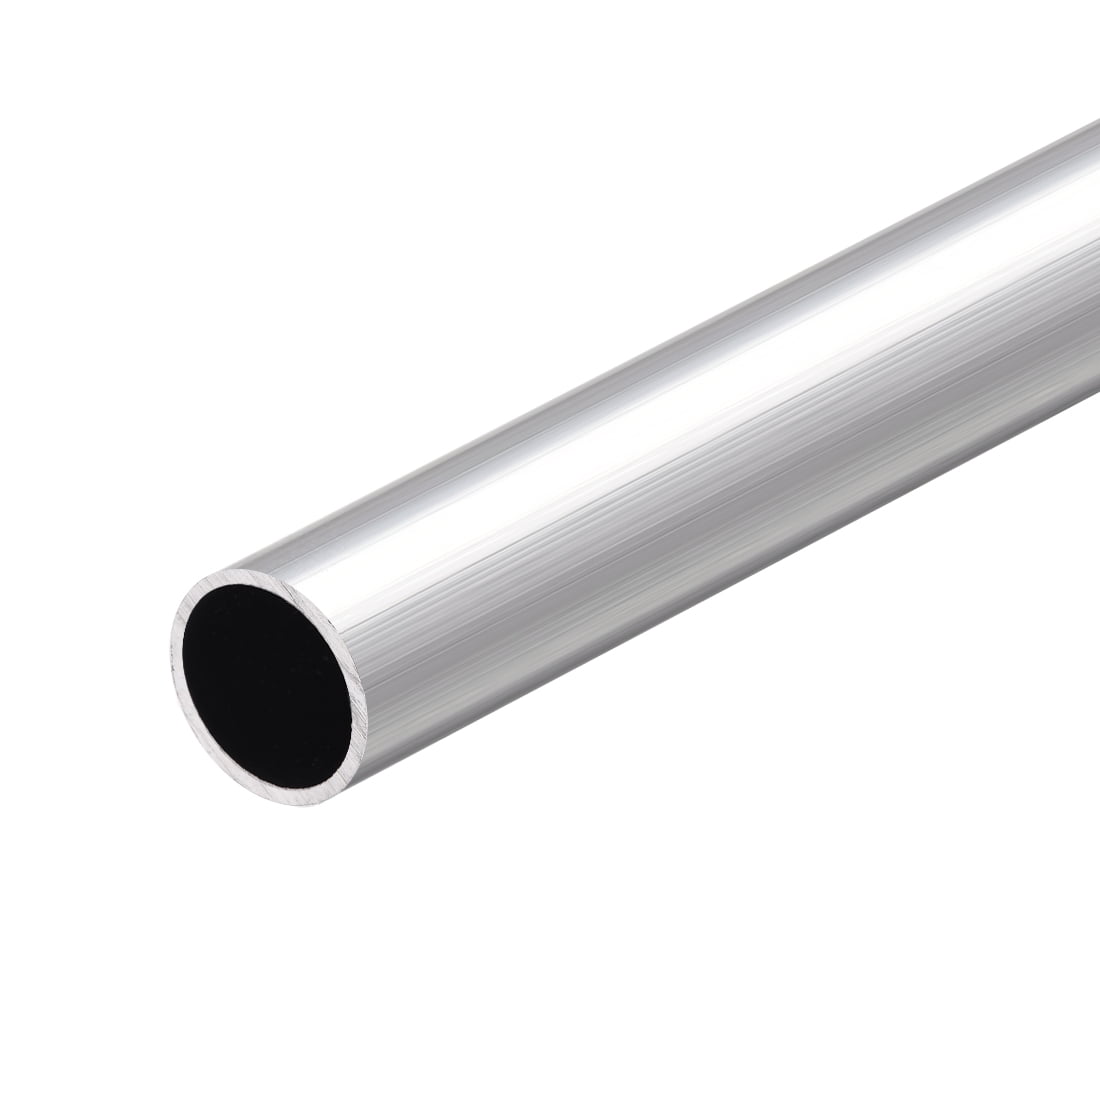 2Pcs 6063 Seamless Aluminum Round Straight Tubing 300mm Length 11mm OD 8mm ID 